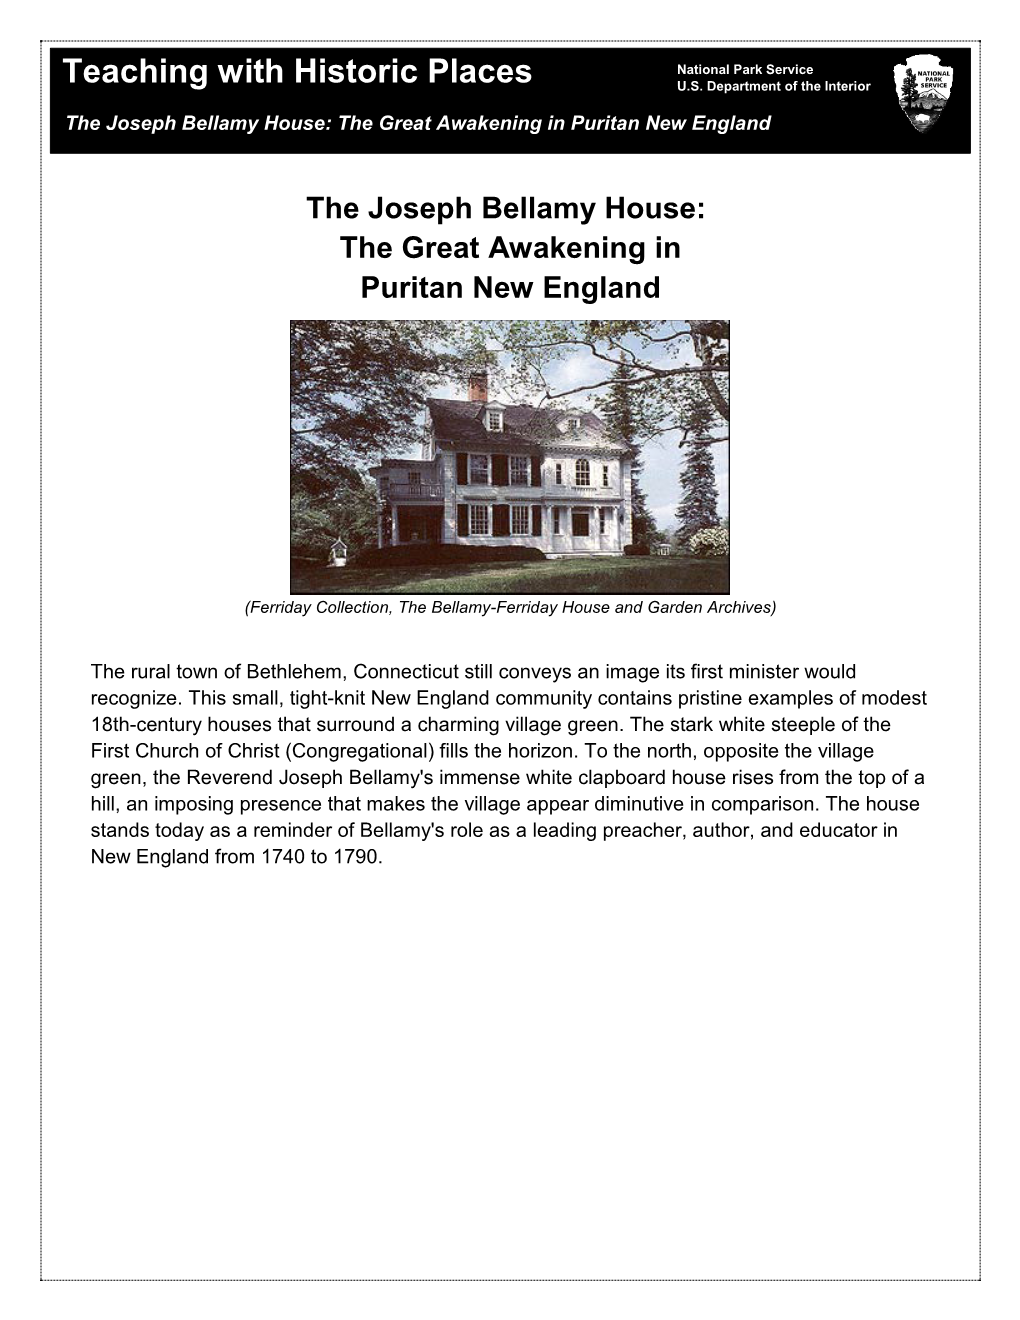 The Joseph Bellamy House: the Great Awakening in Puritan New England